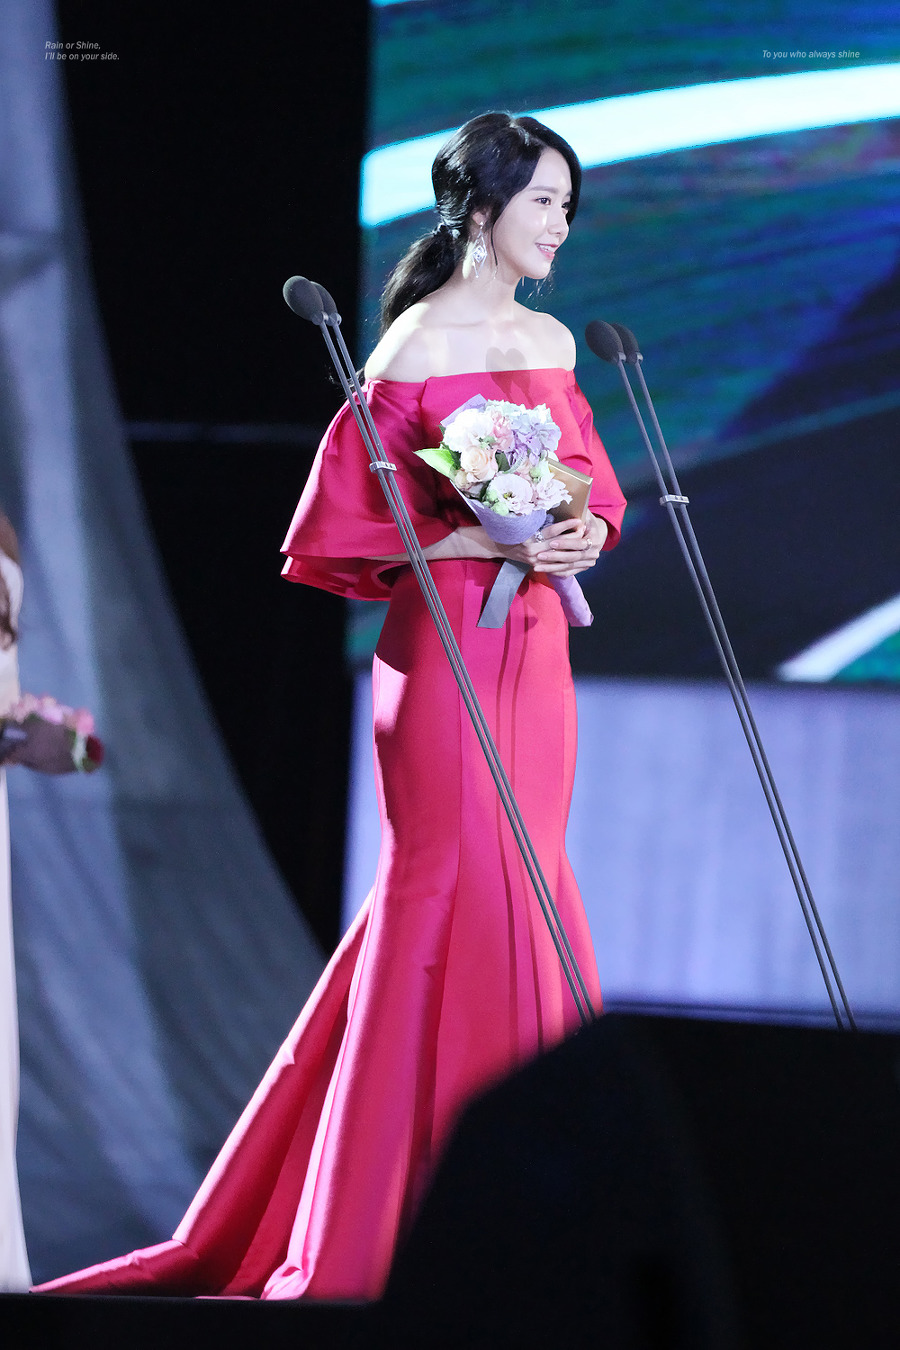 [PIC][03-05-2017]YoonA tham dự "53rd Baeksang Arts Awards" vào chiều nay + Giành "Most Popular Actress or Star Century Popularity Award (in Film)" - Page 2 27281633590C930E1971C2